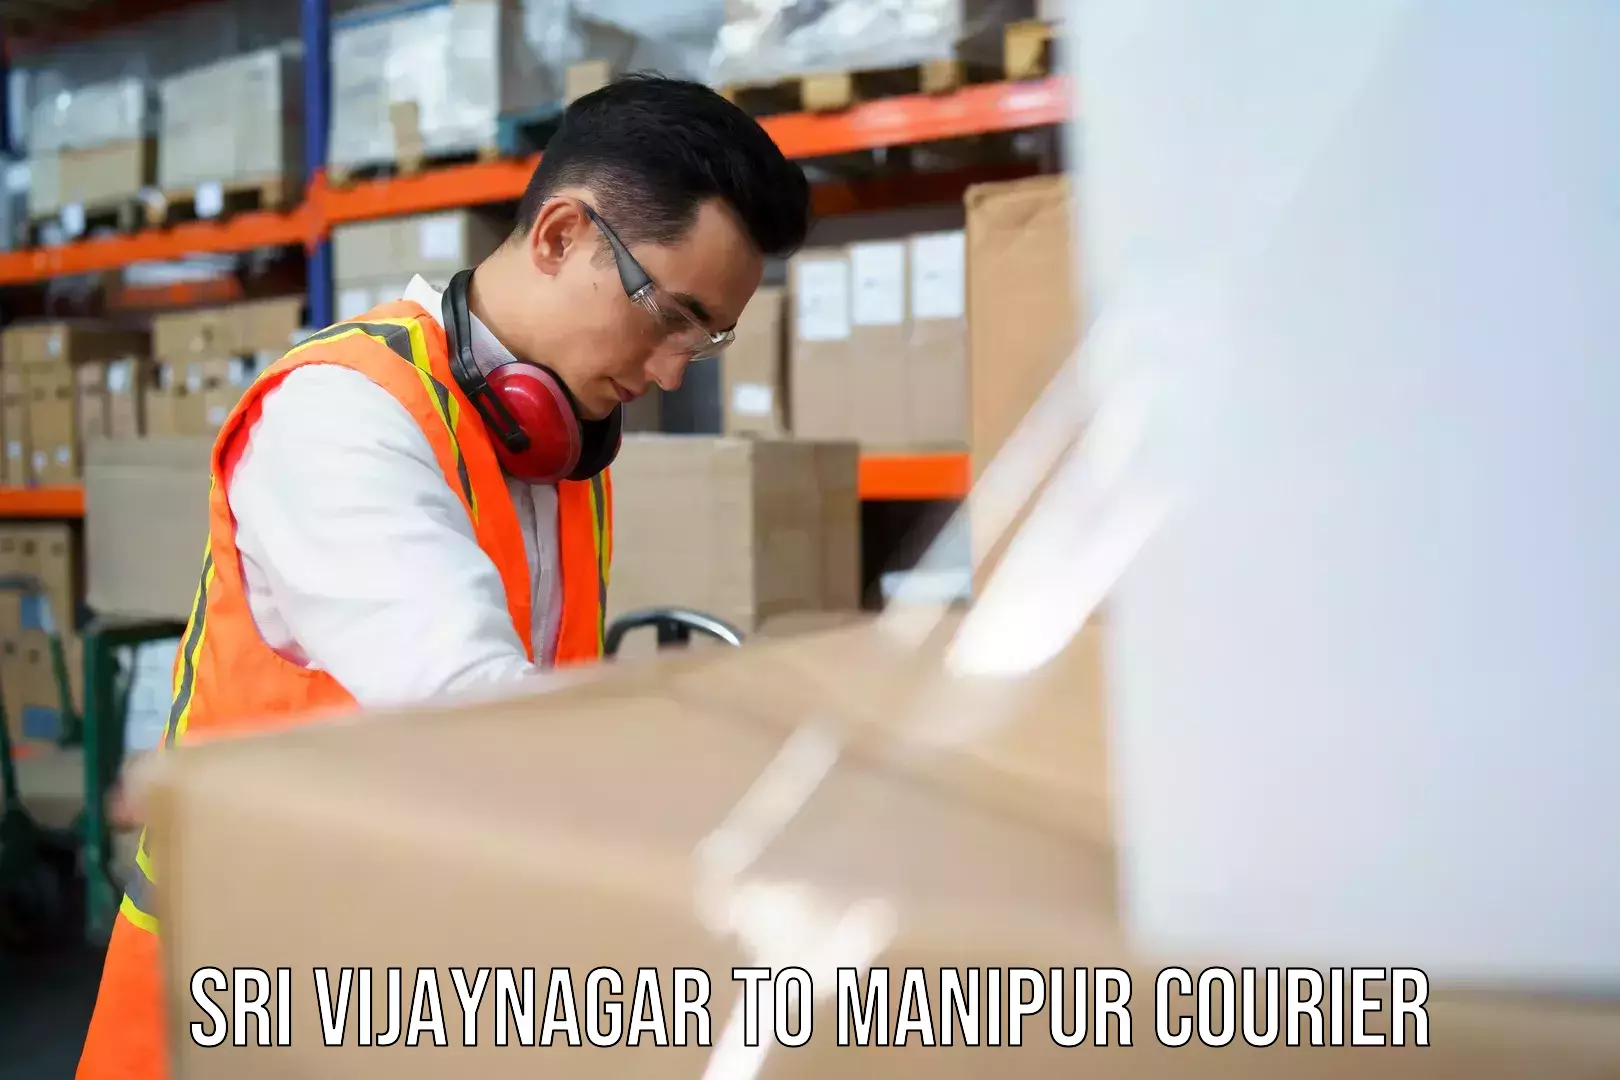 Courier service booking Sri Vijaynagar to Senapati